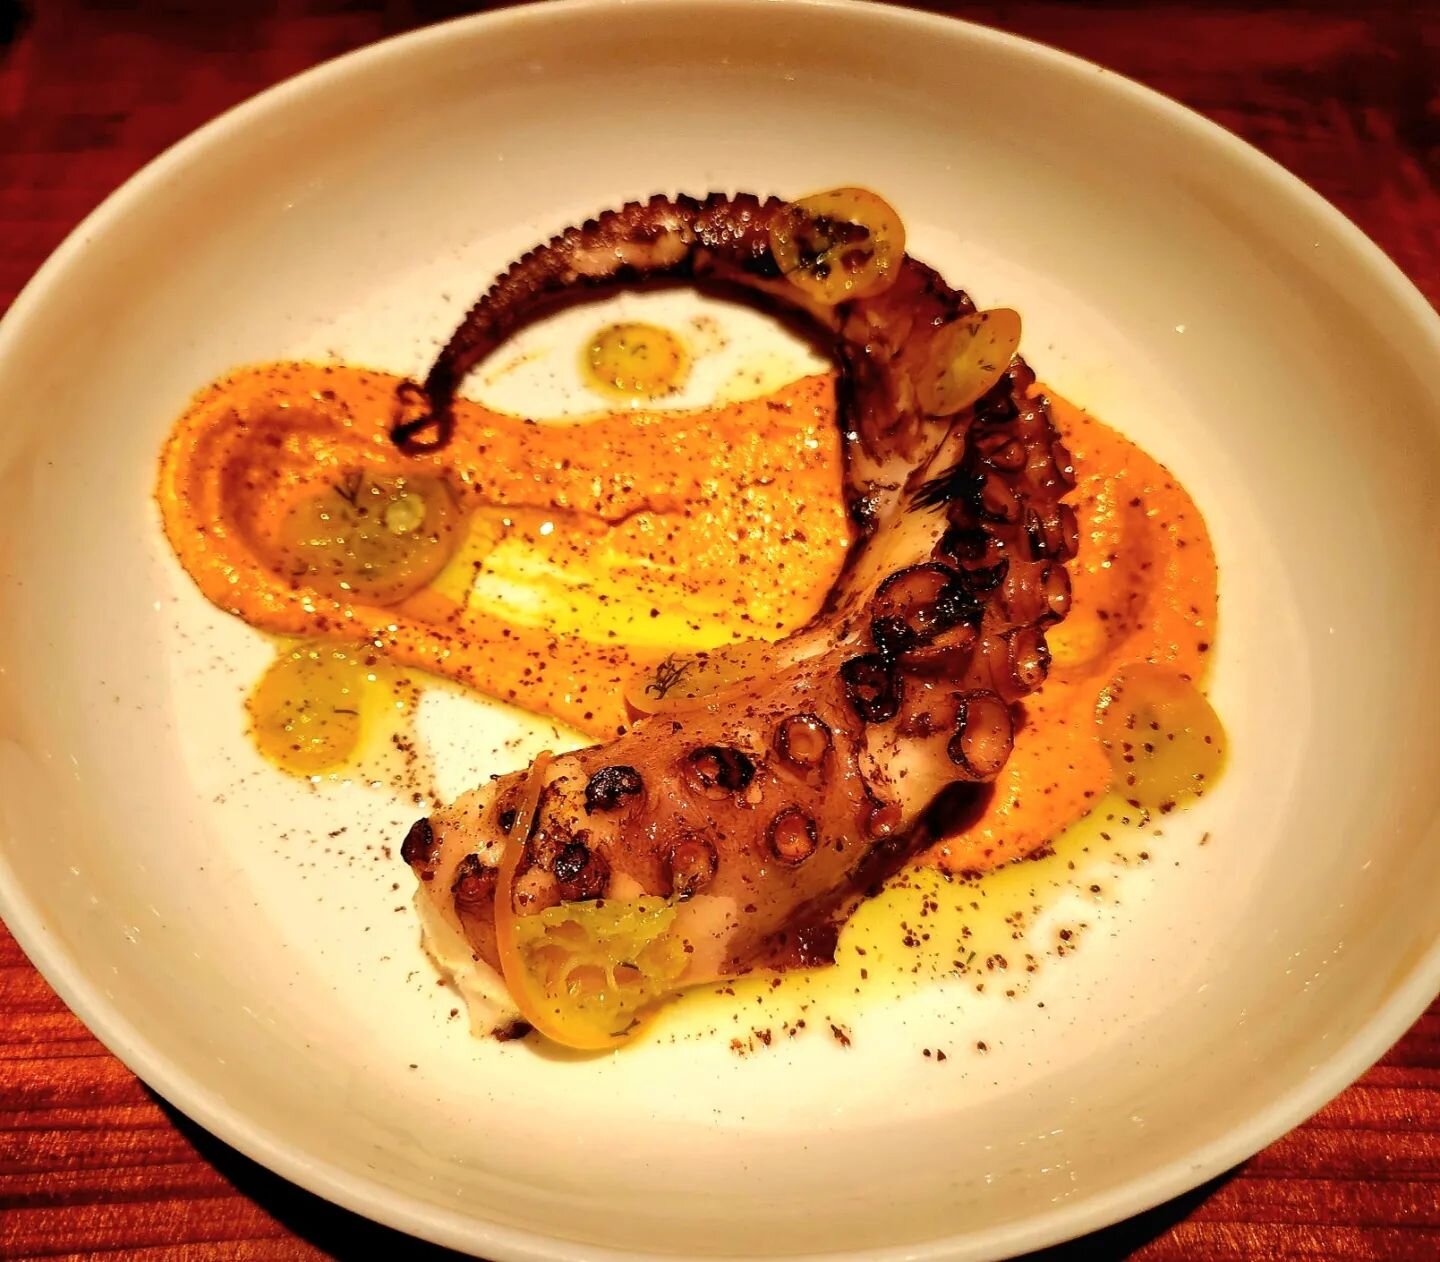 New dish! Grilled Octopus with romesco and kumquat vinaigrette 😋